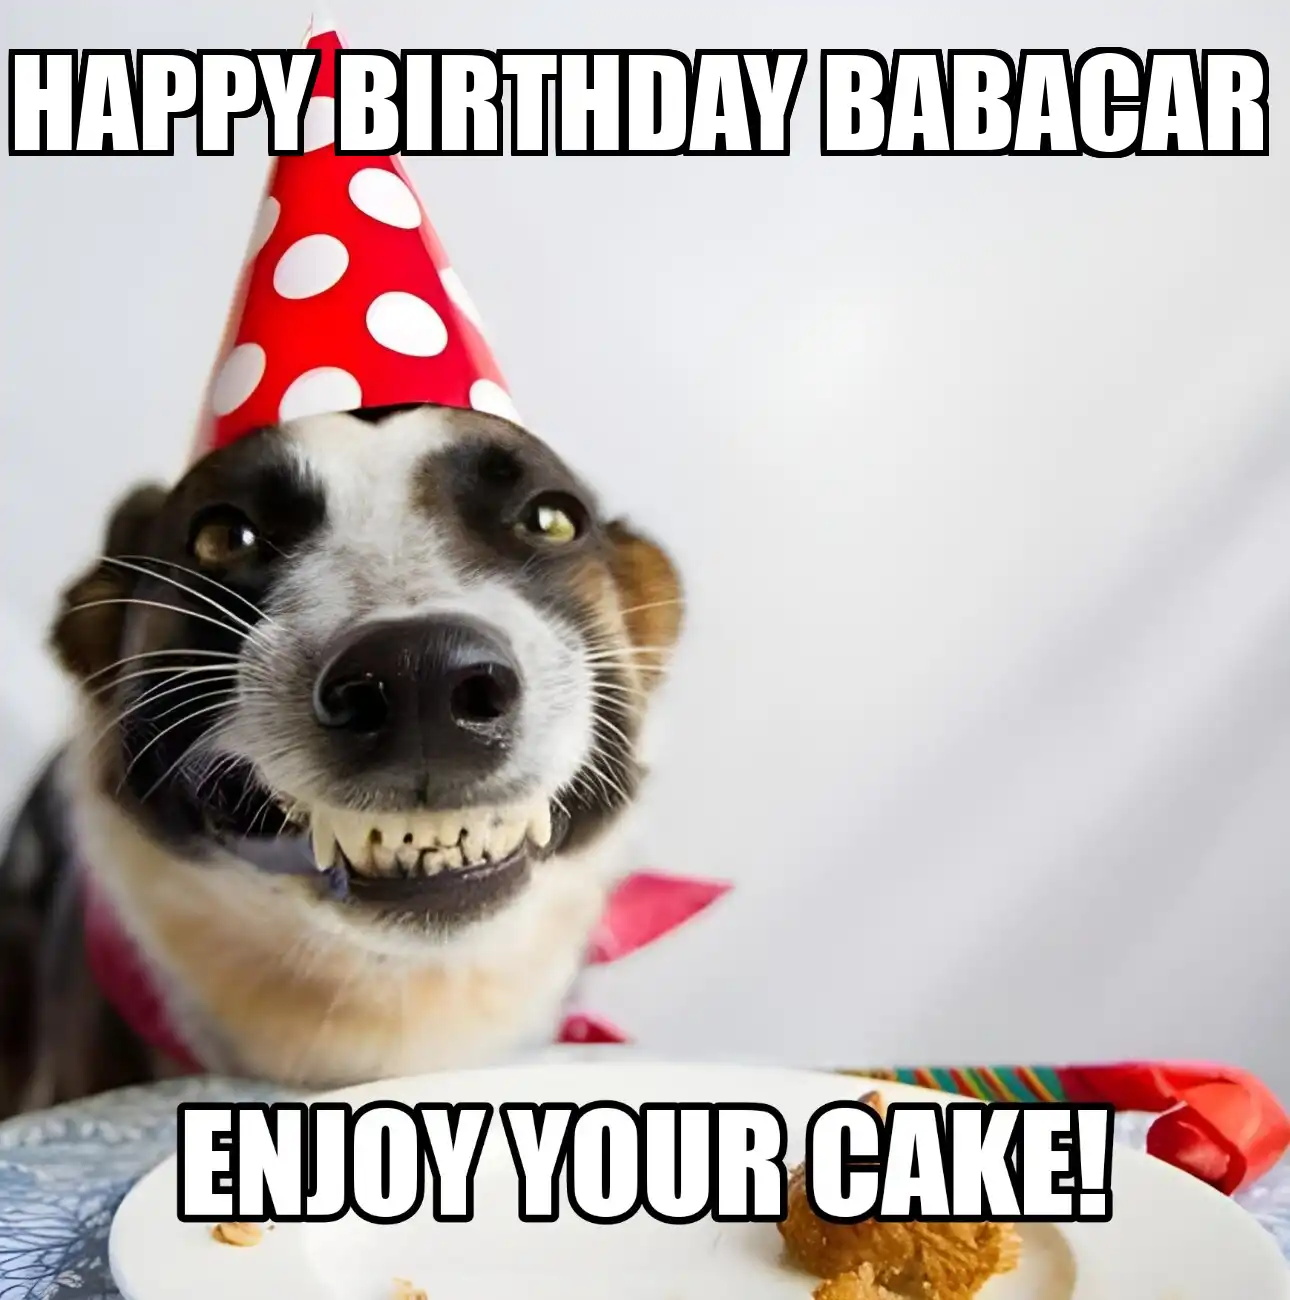 Happy Birthday Babacar Enjoy Your Cake Dog Meme